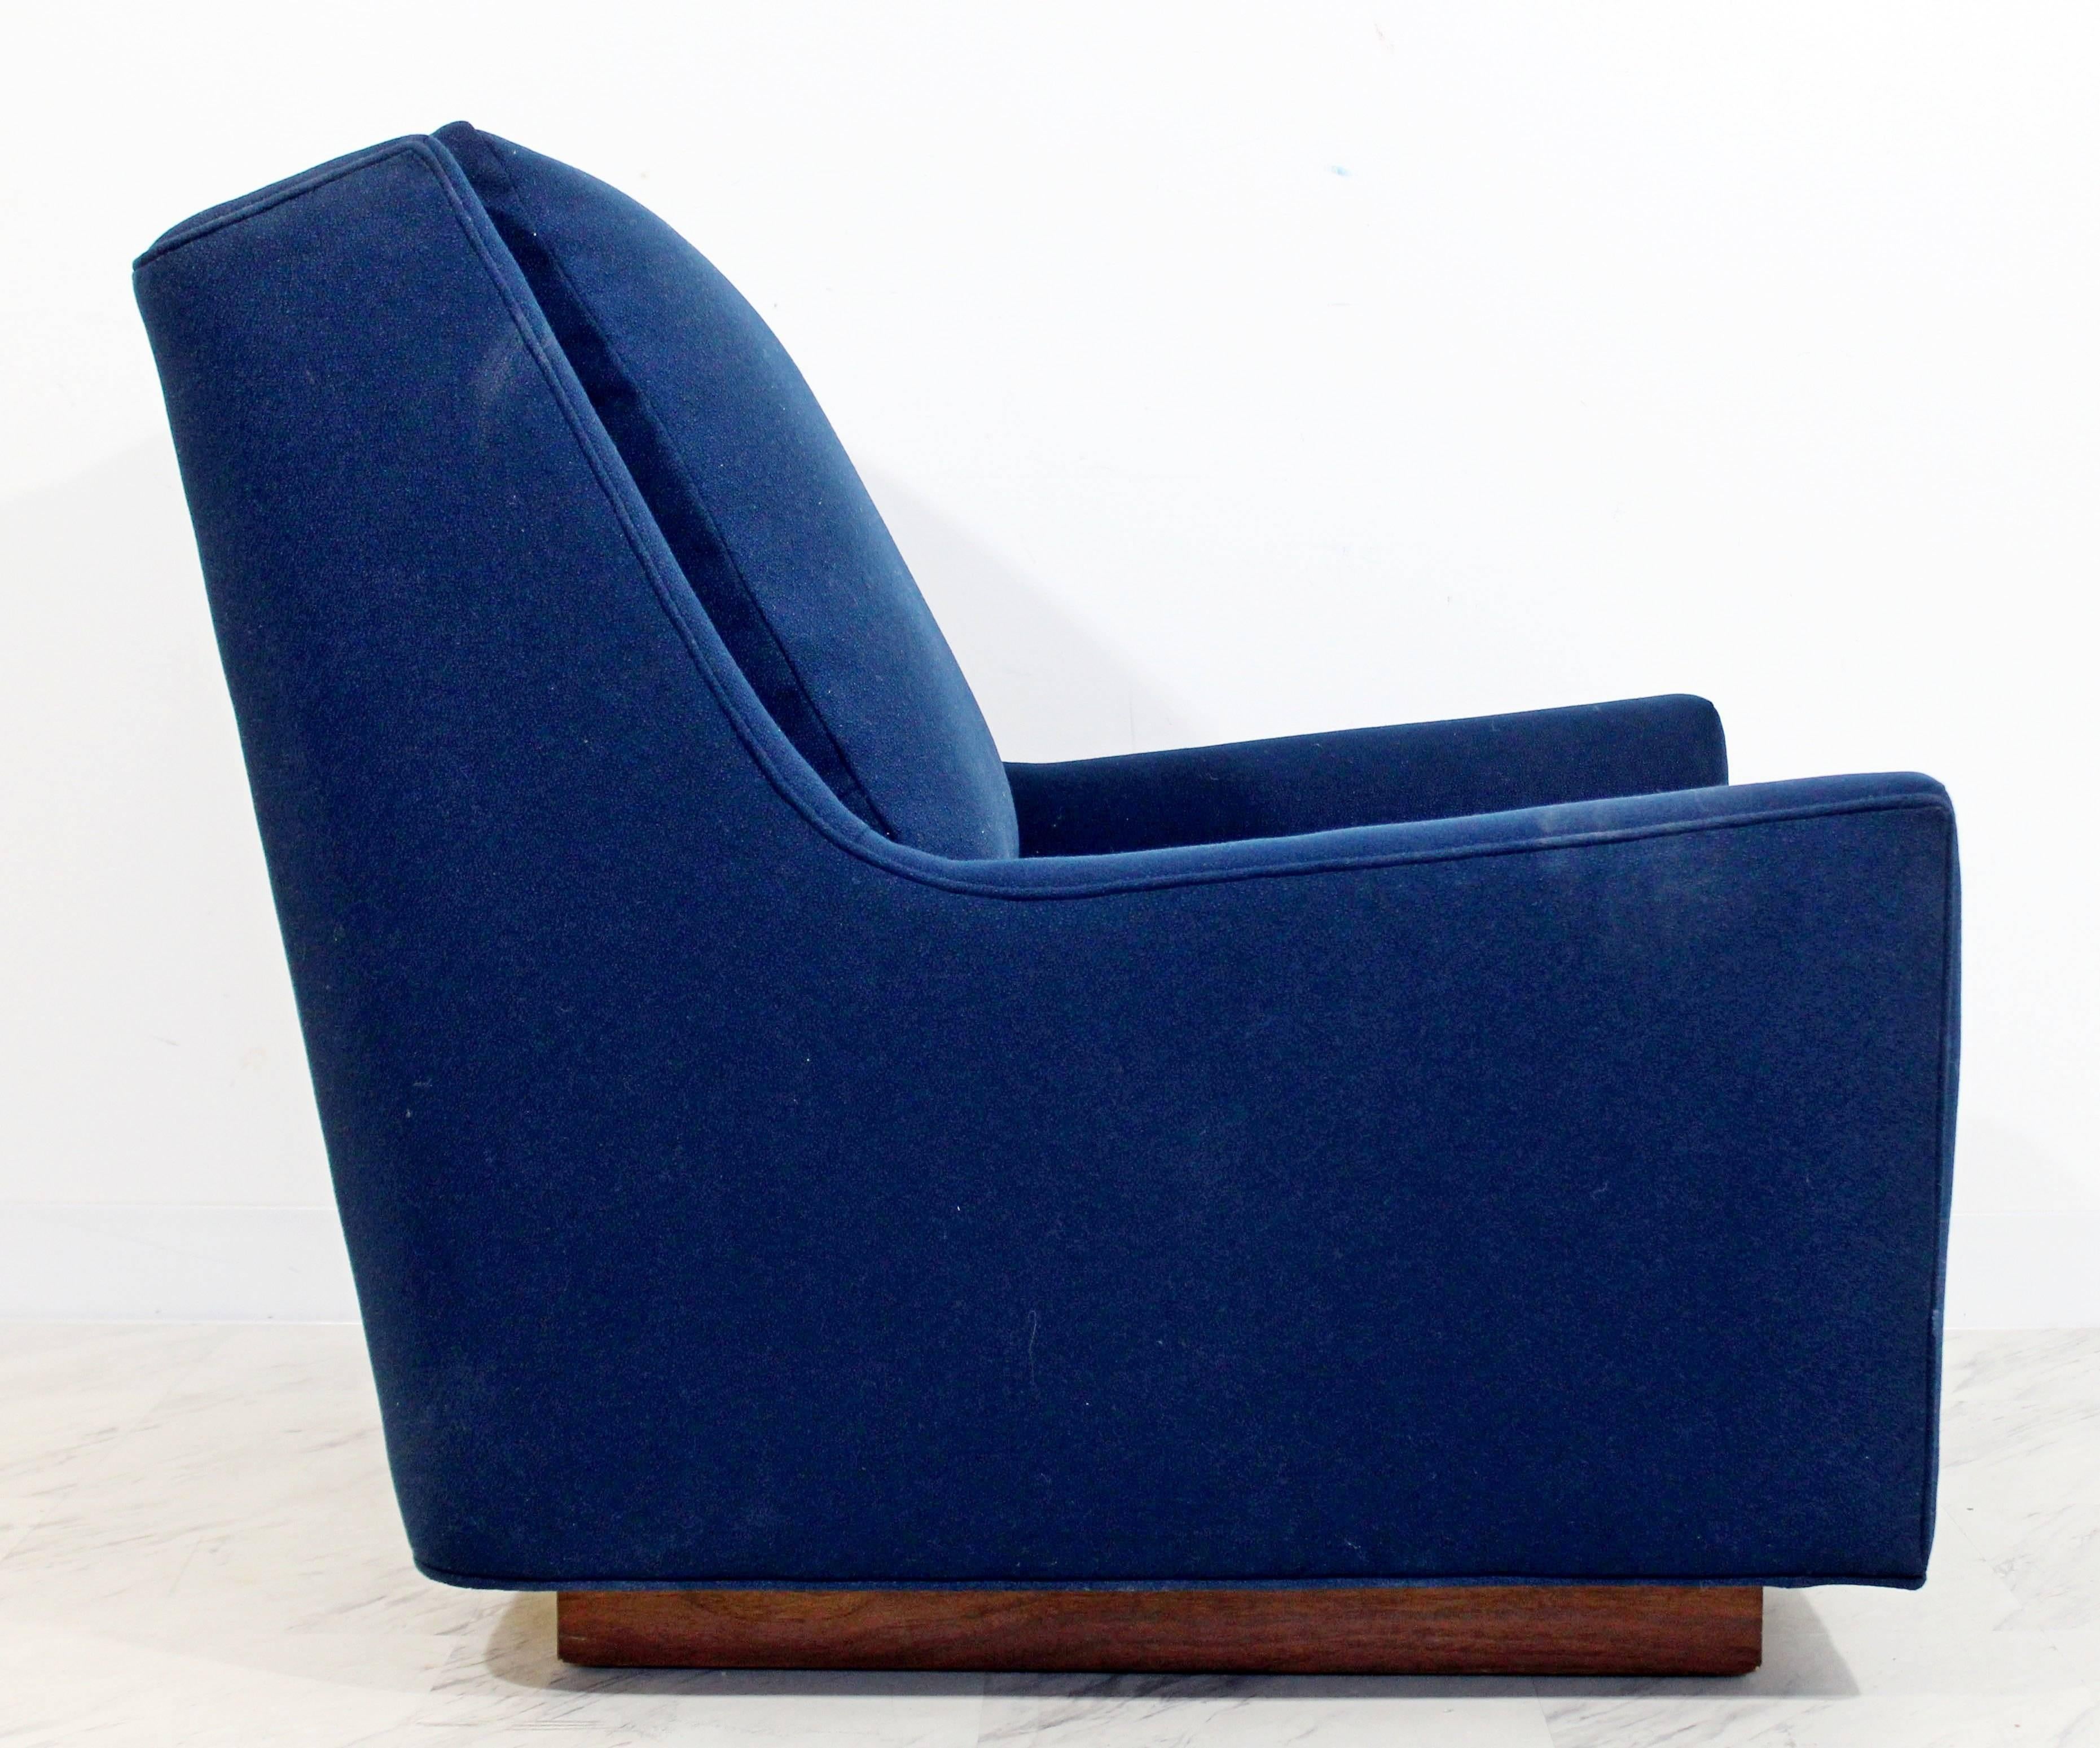 Late 20th Century Mid-Century Modern Rare Milo Baughman Wood Plinth Base Lounge Accent Chair 1970s